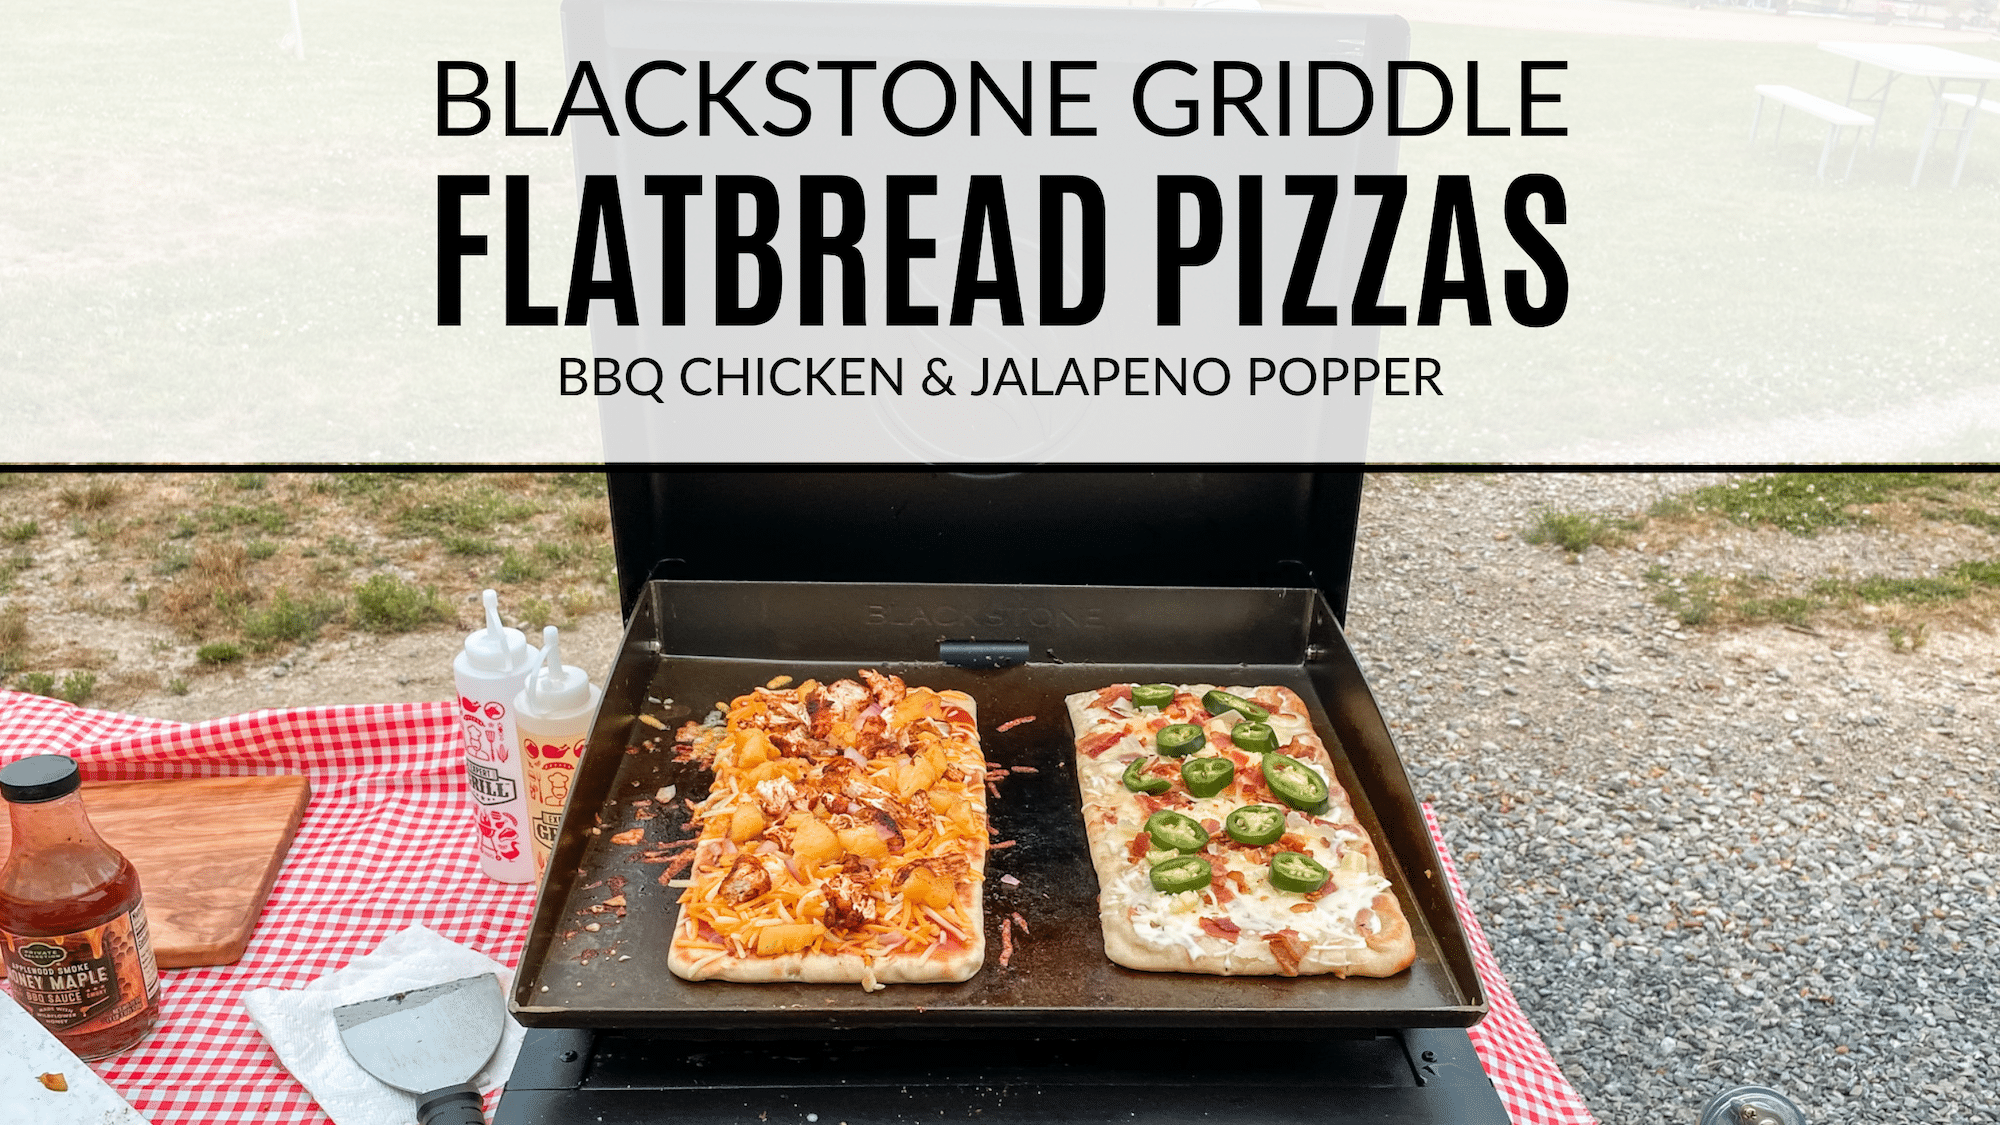 Blackstone Griddle Flatbread Pizzas featured image